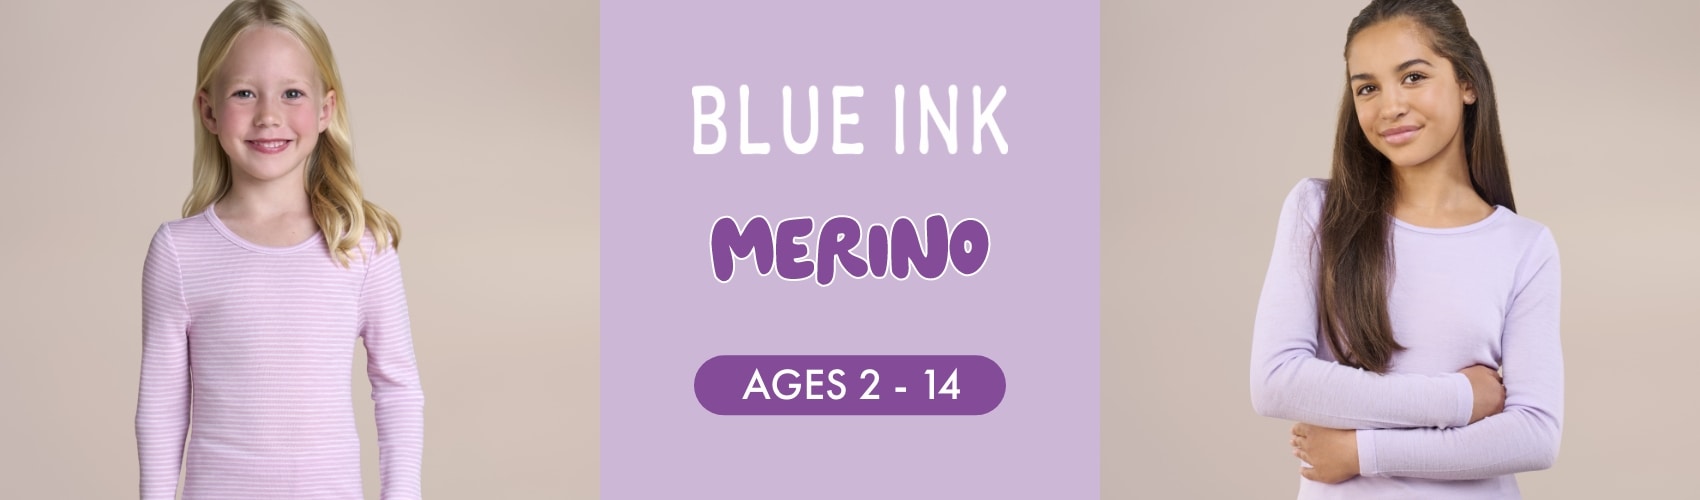 Blue Ink Girls